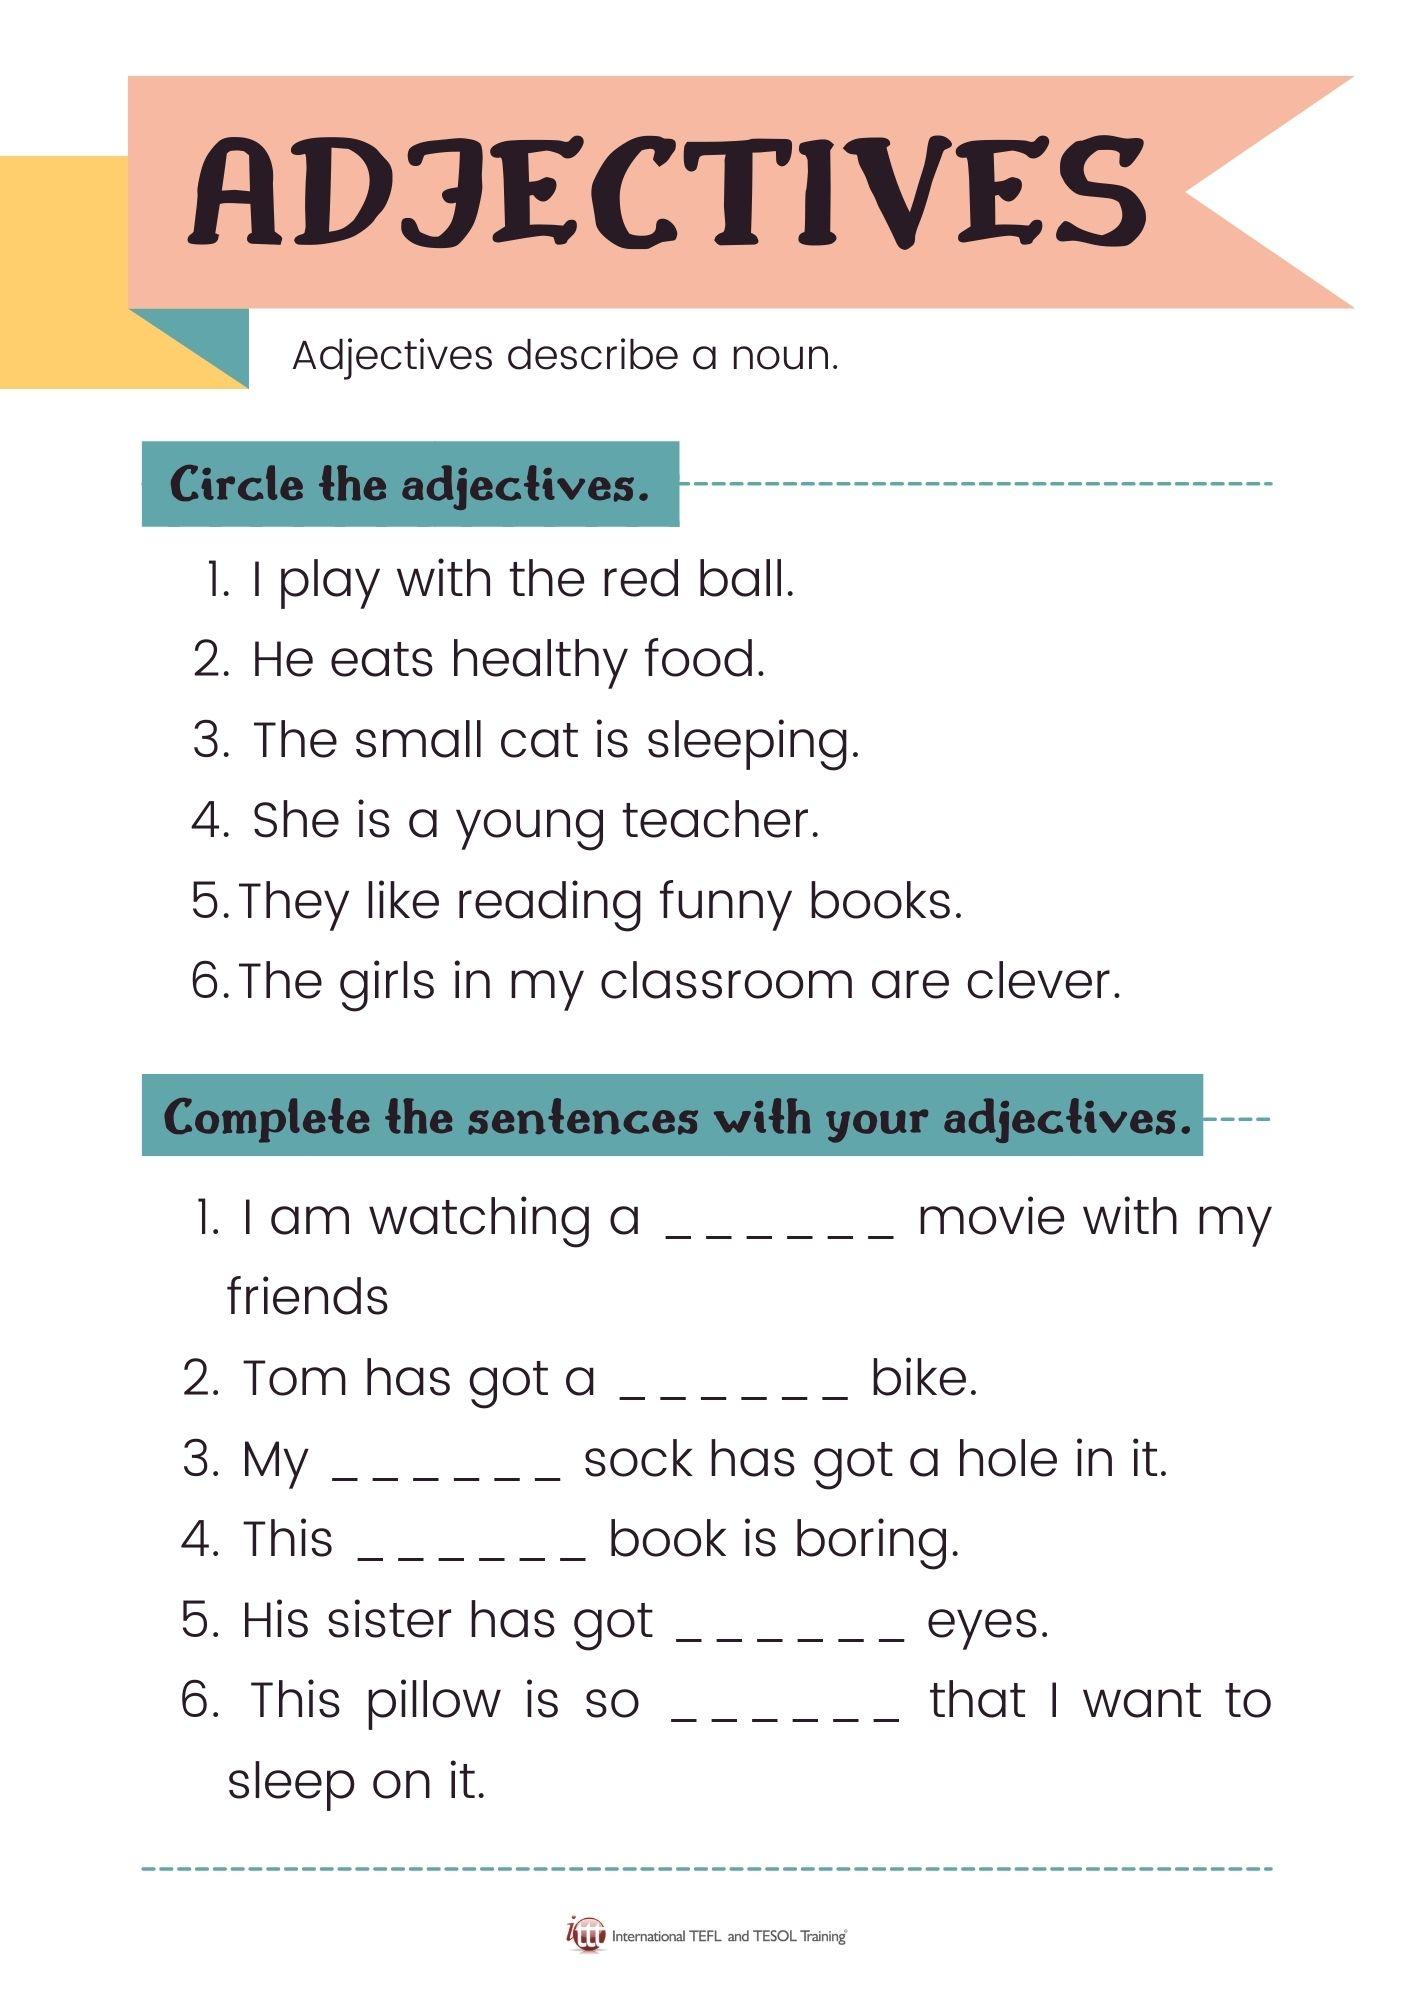 Grammar Corner Introduction to Adjectives II